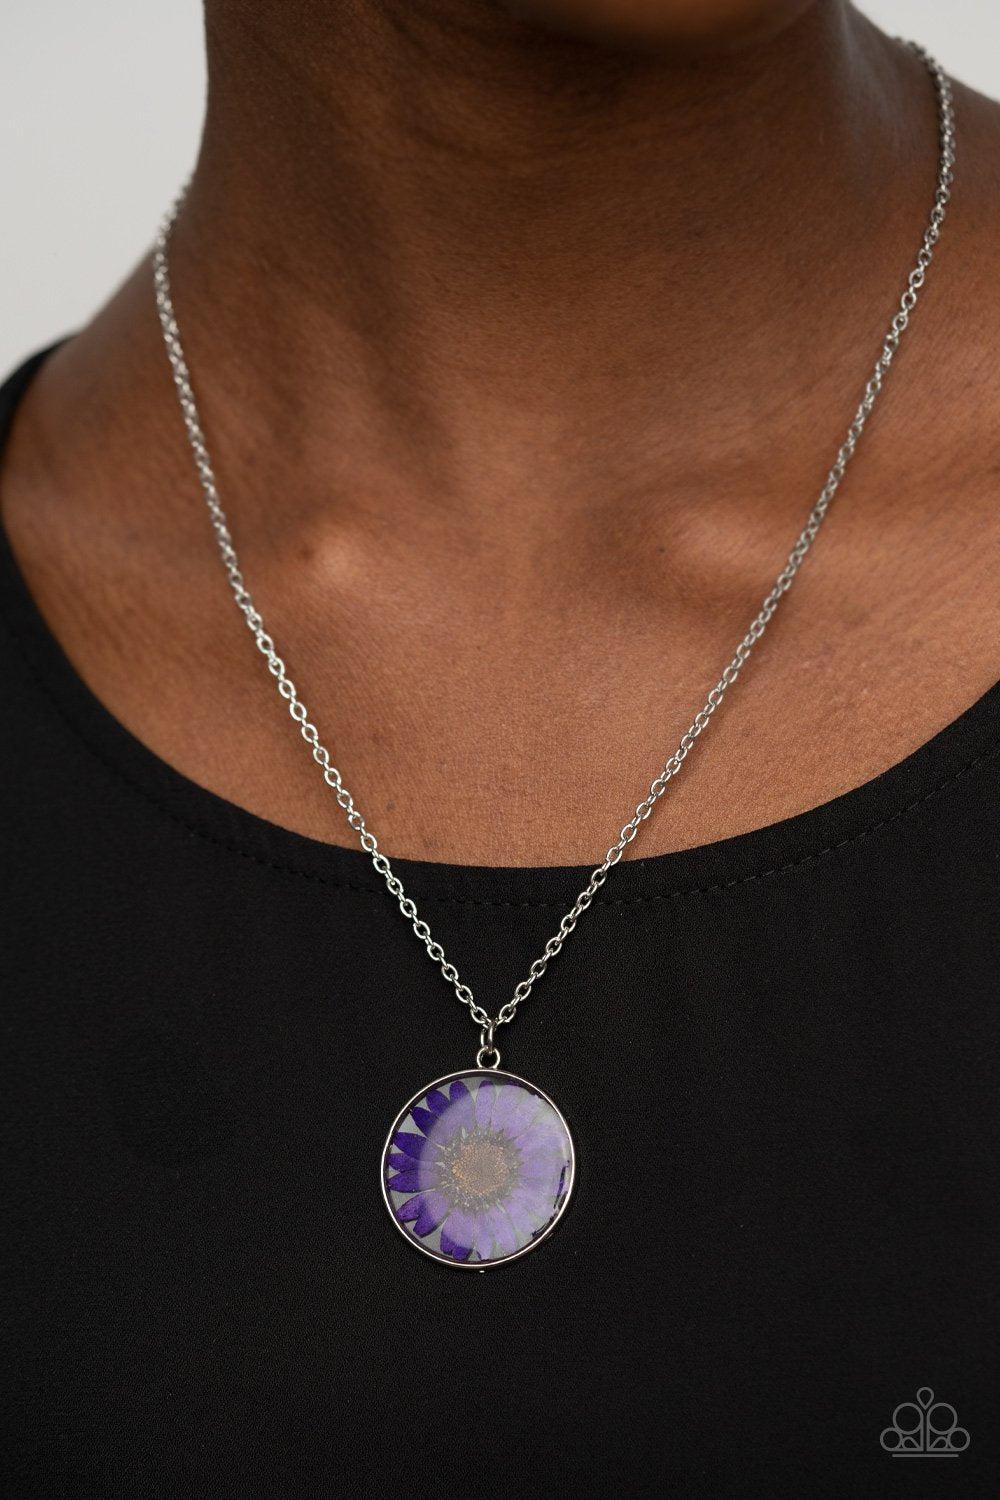 Prairie Promenade Purple Pressed Flower Necklace - Paparazzi Accessories- model - CarasShop.com - $5 Jewelry by Cara Jewels